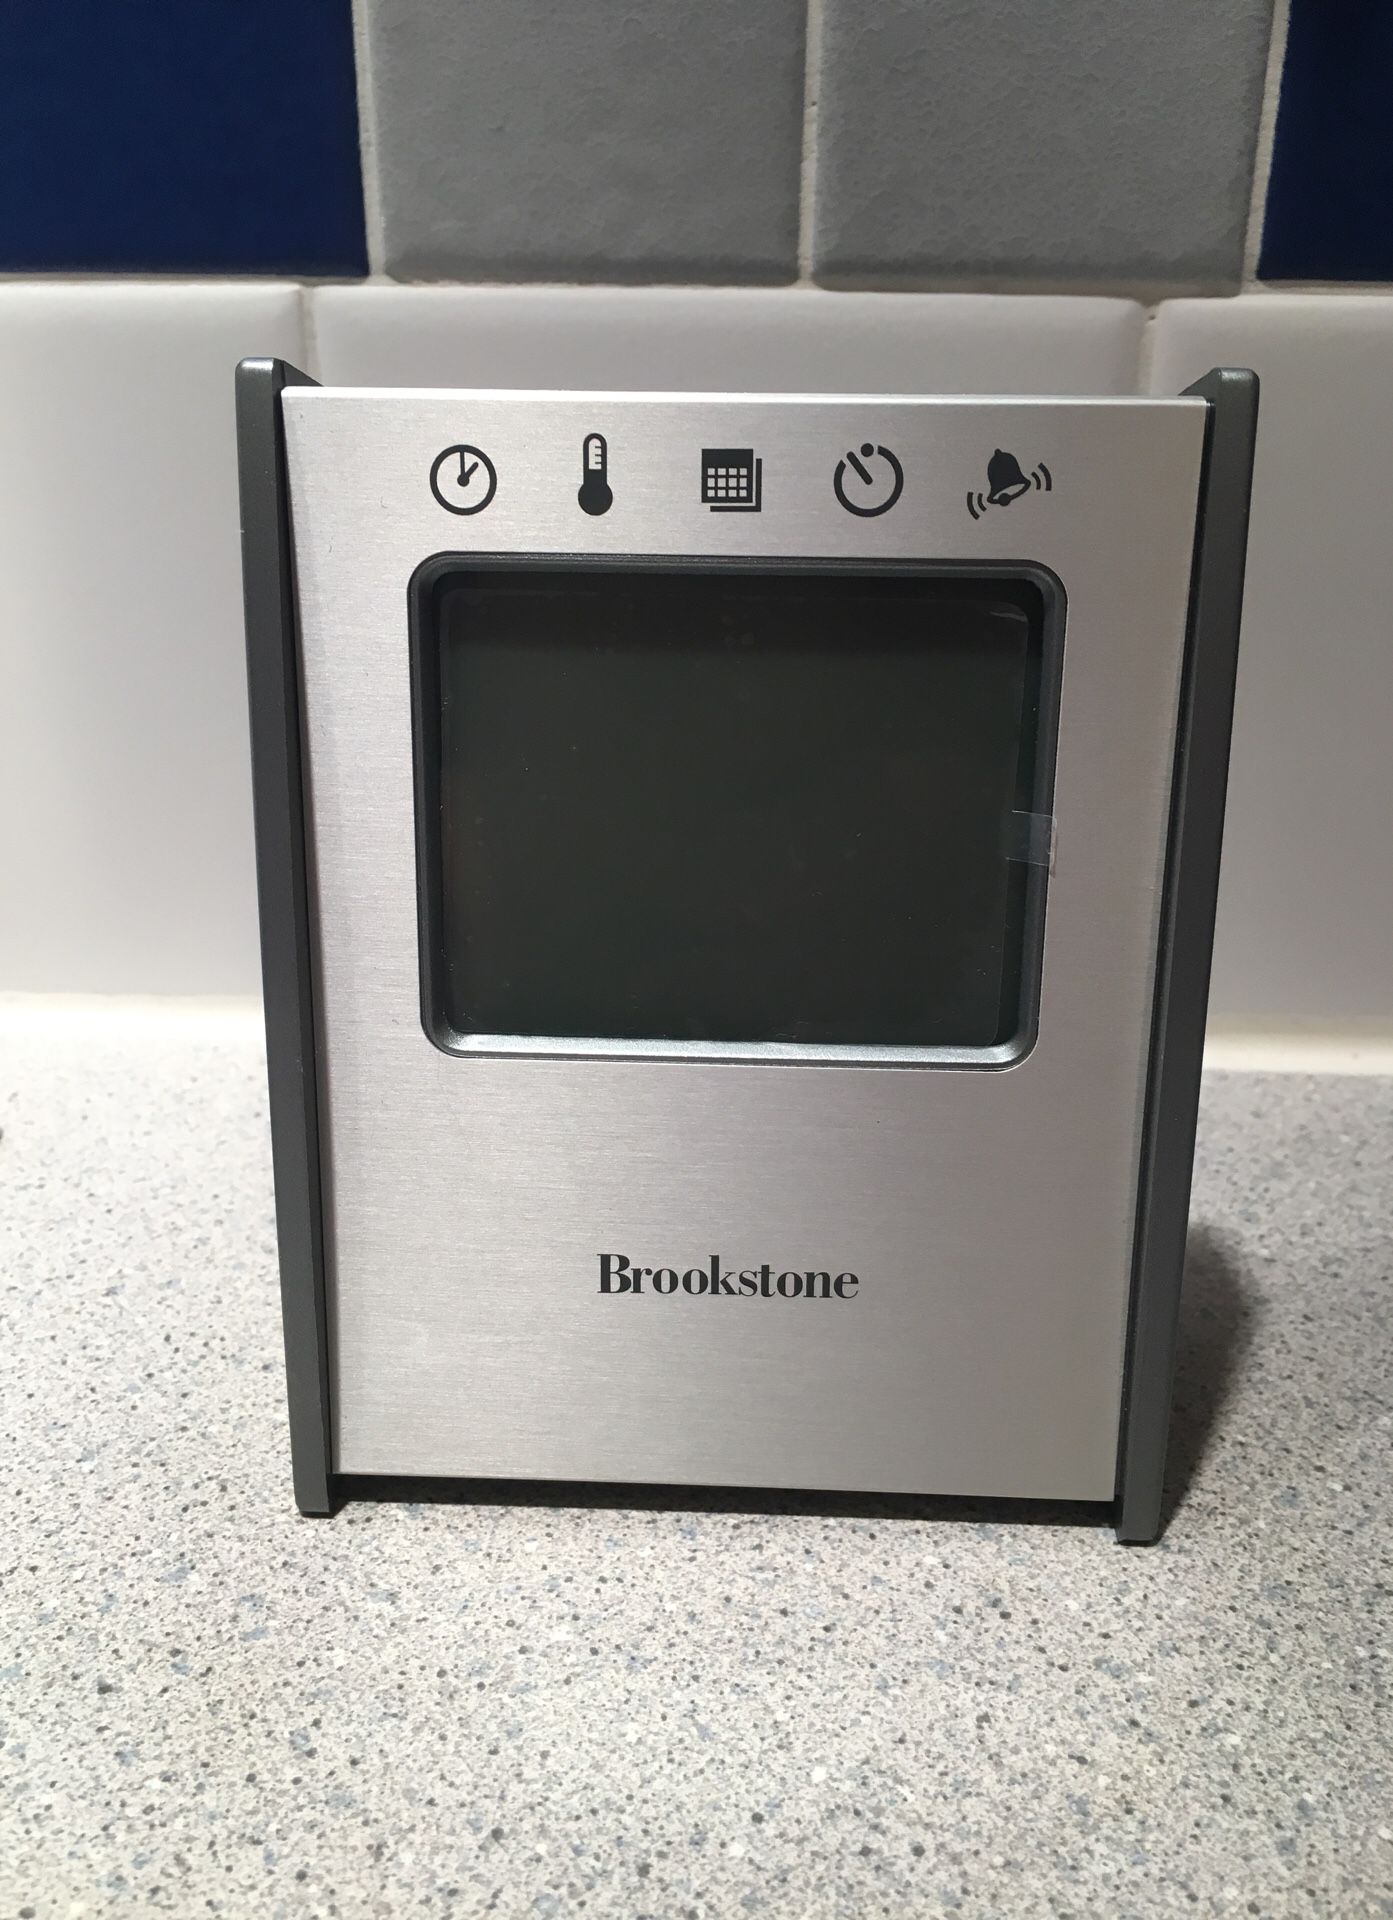 Brookstone 5-in-1 Sensor clock